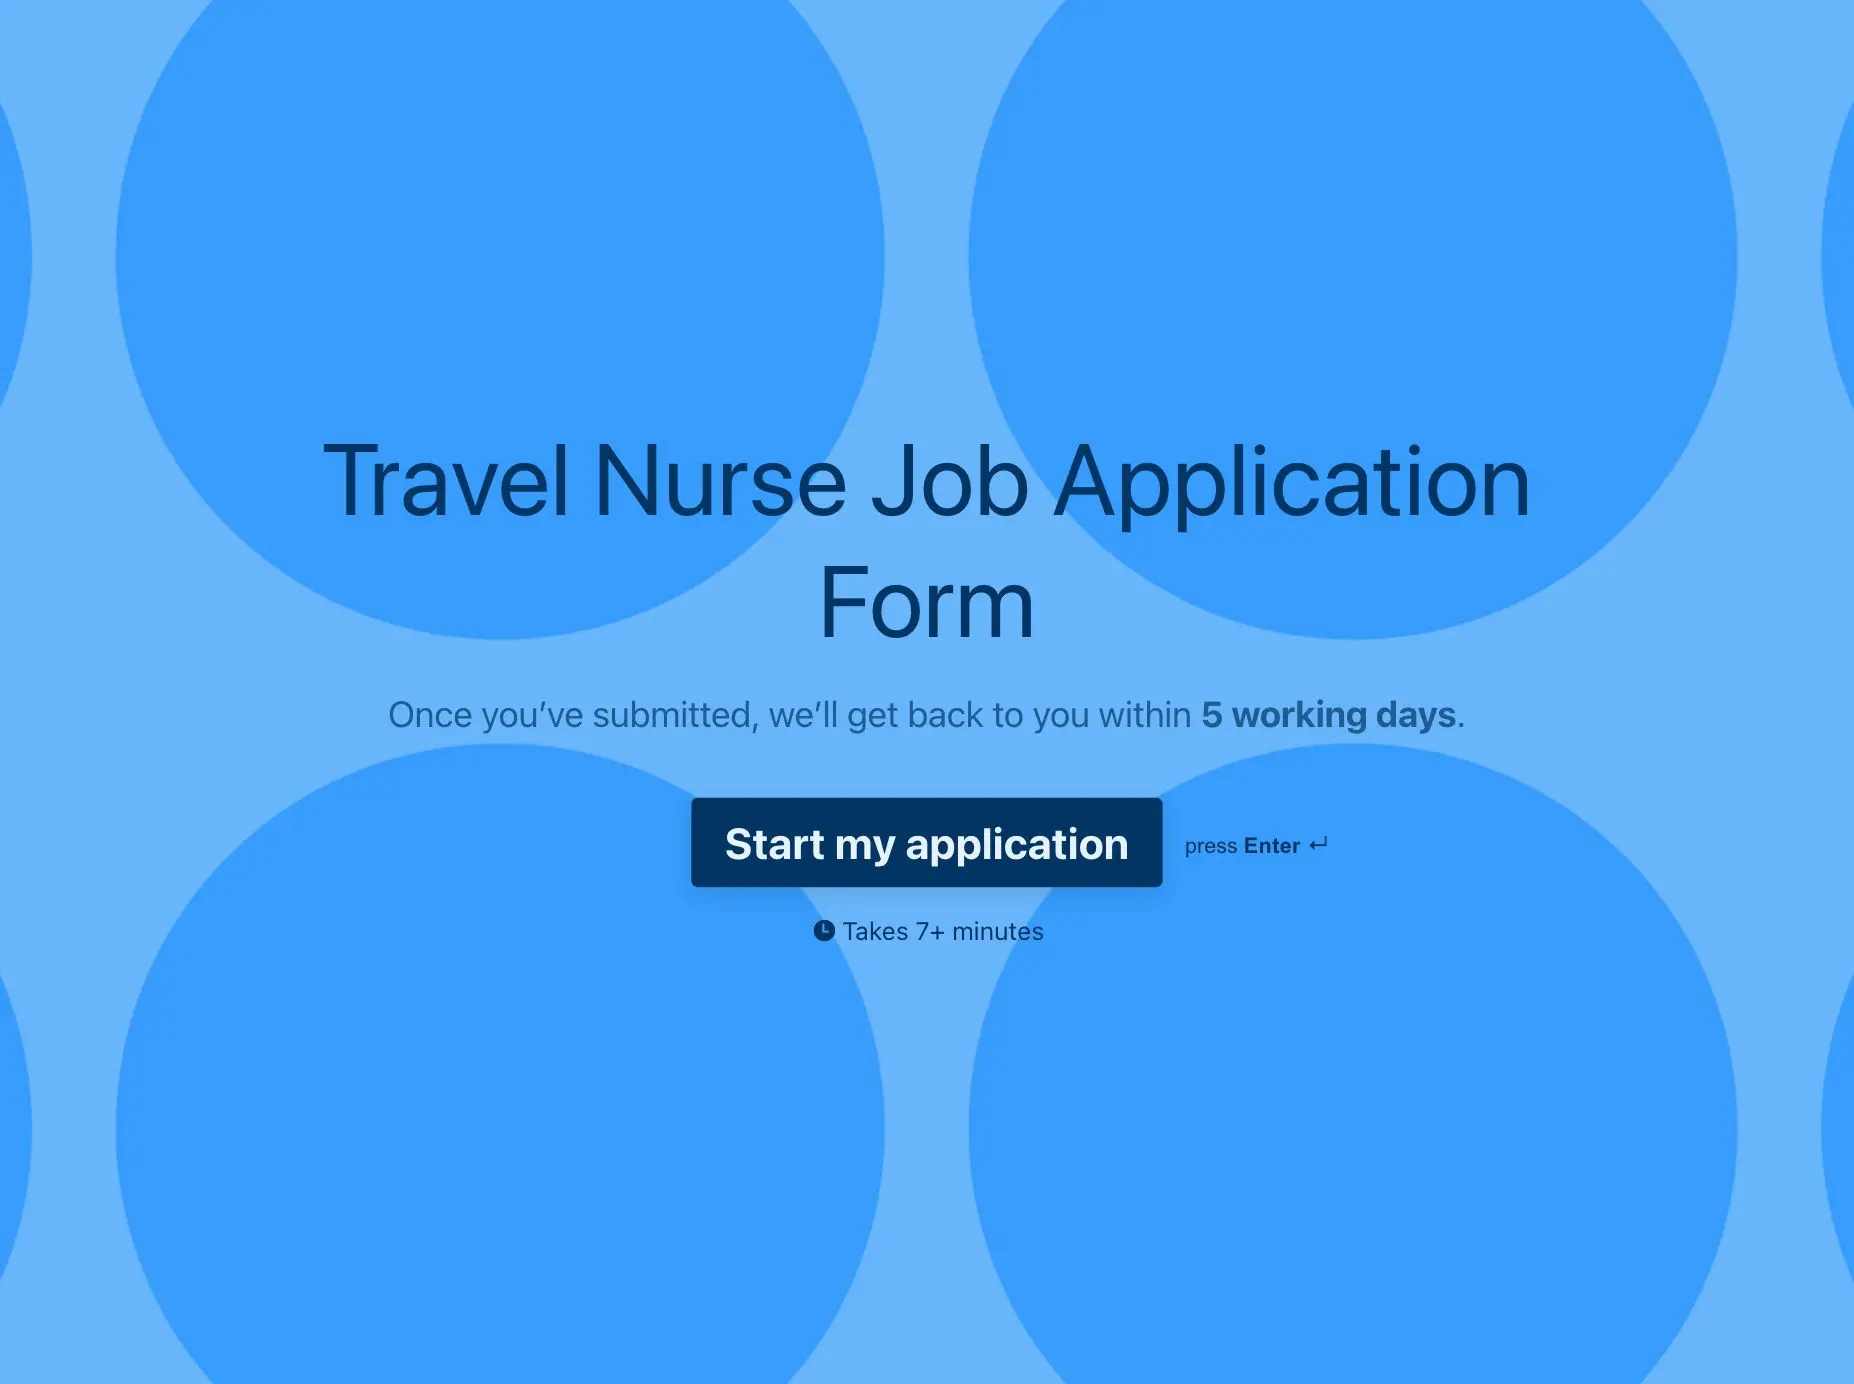 Travel Nurse Job Application Form Template Hero